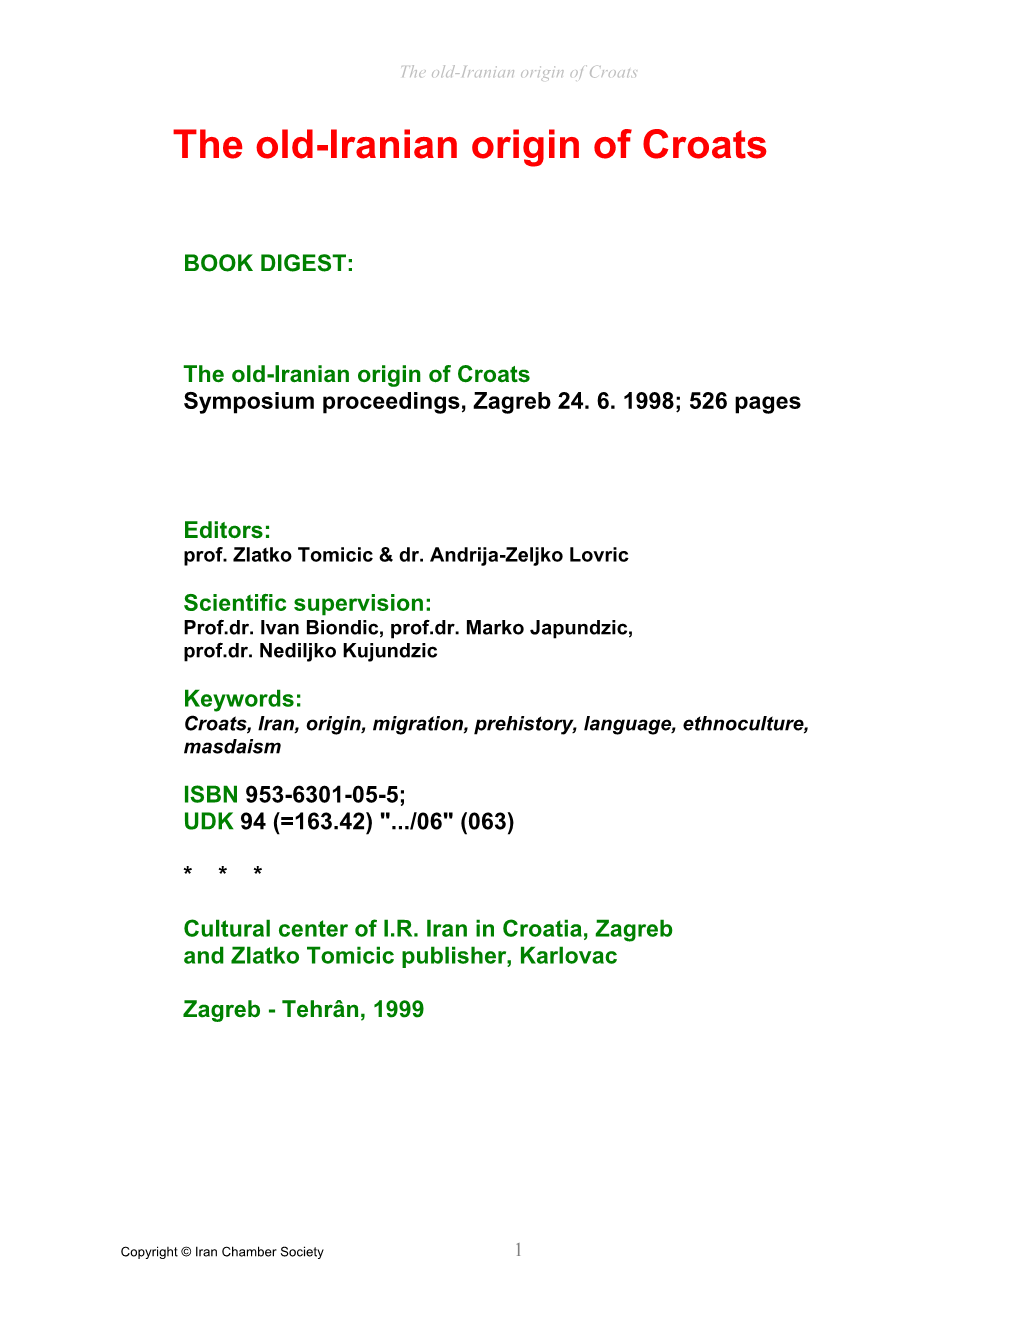 The Old-Iranian Origin of Croats